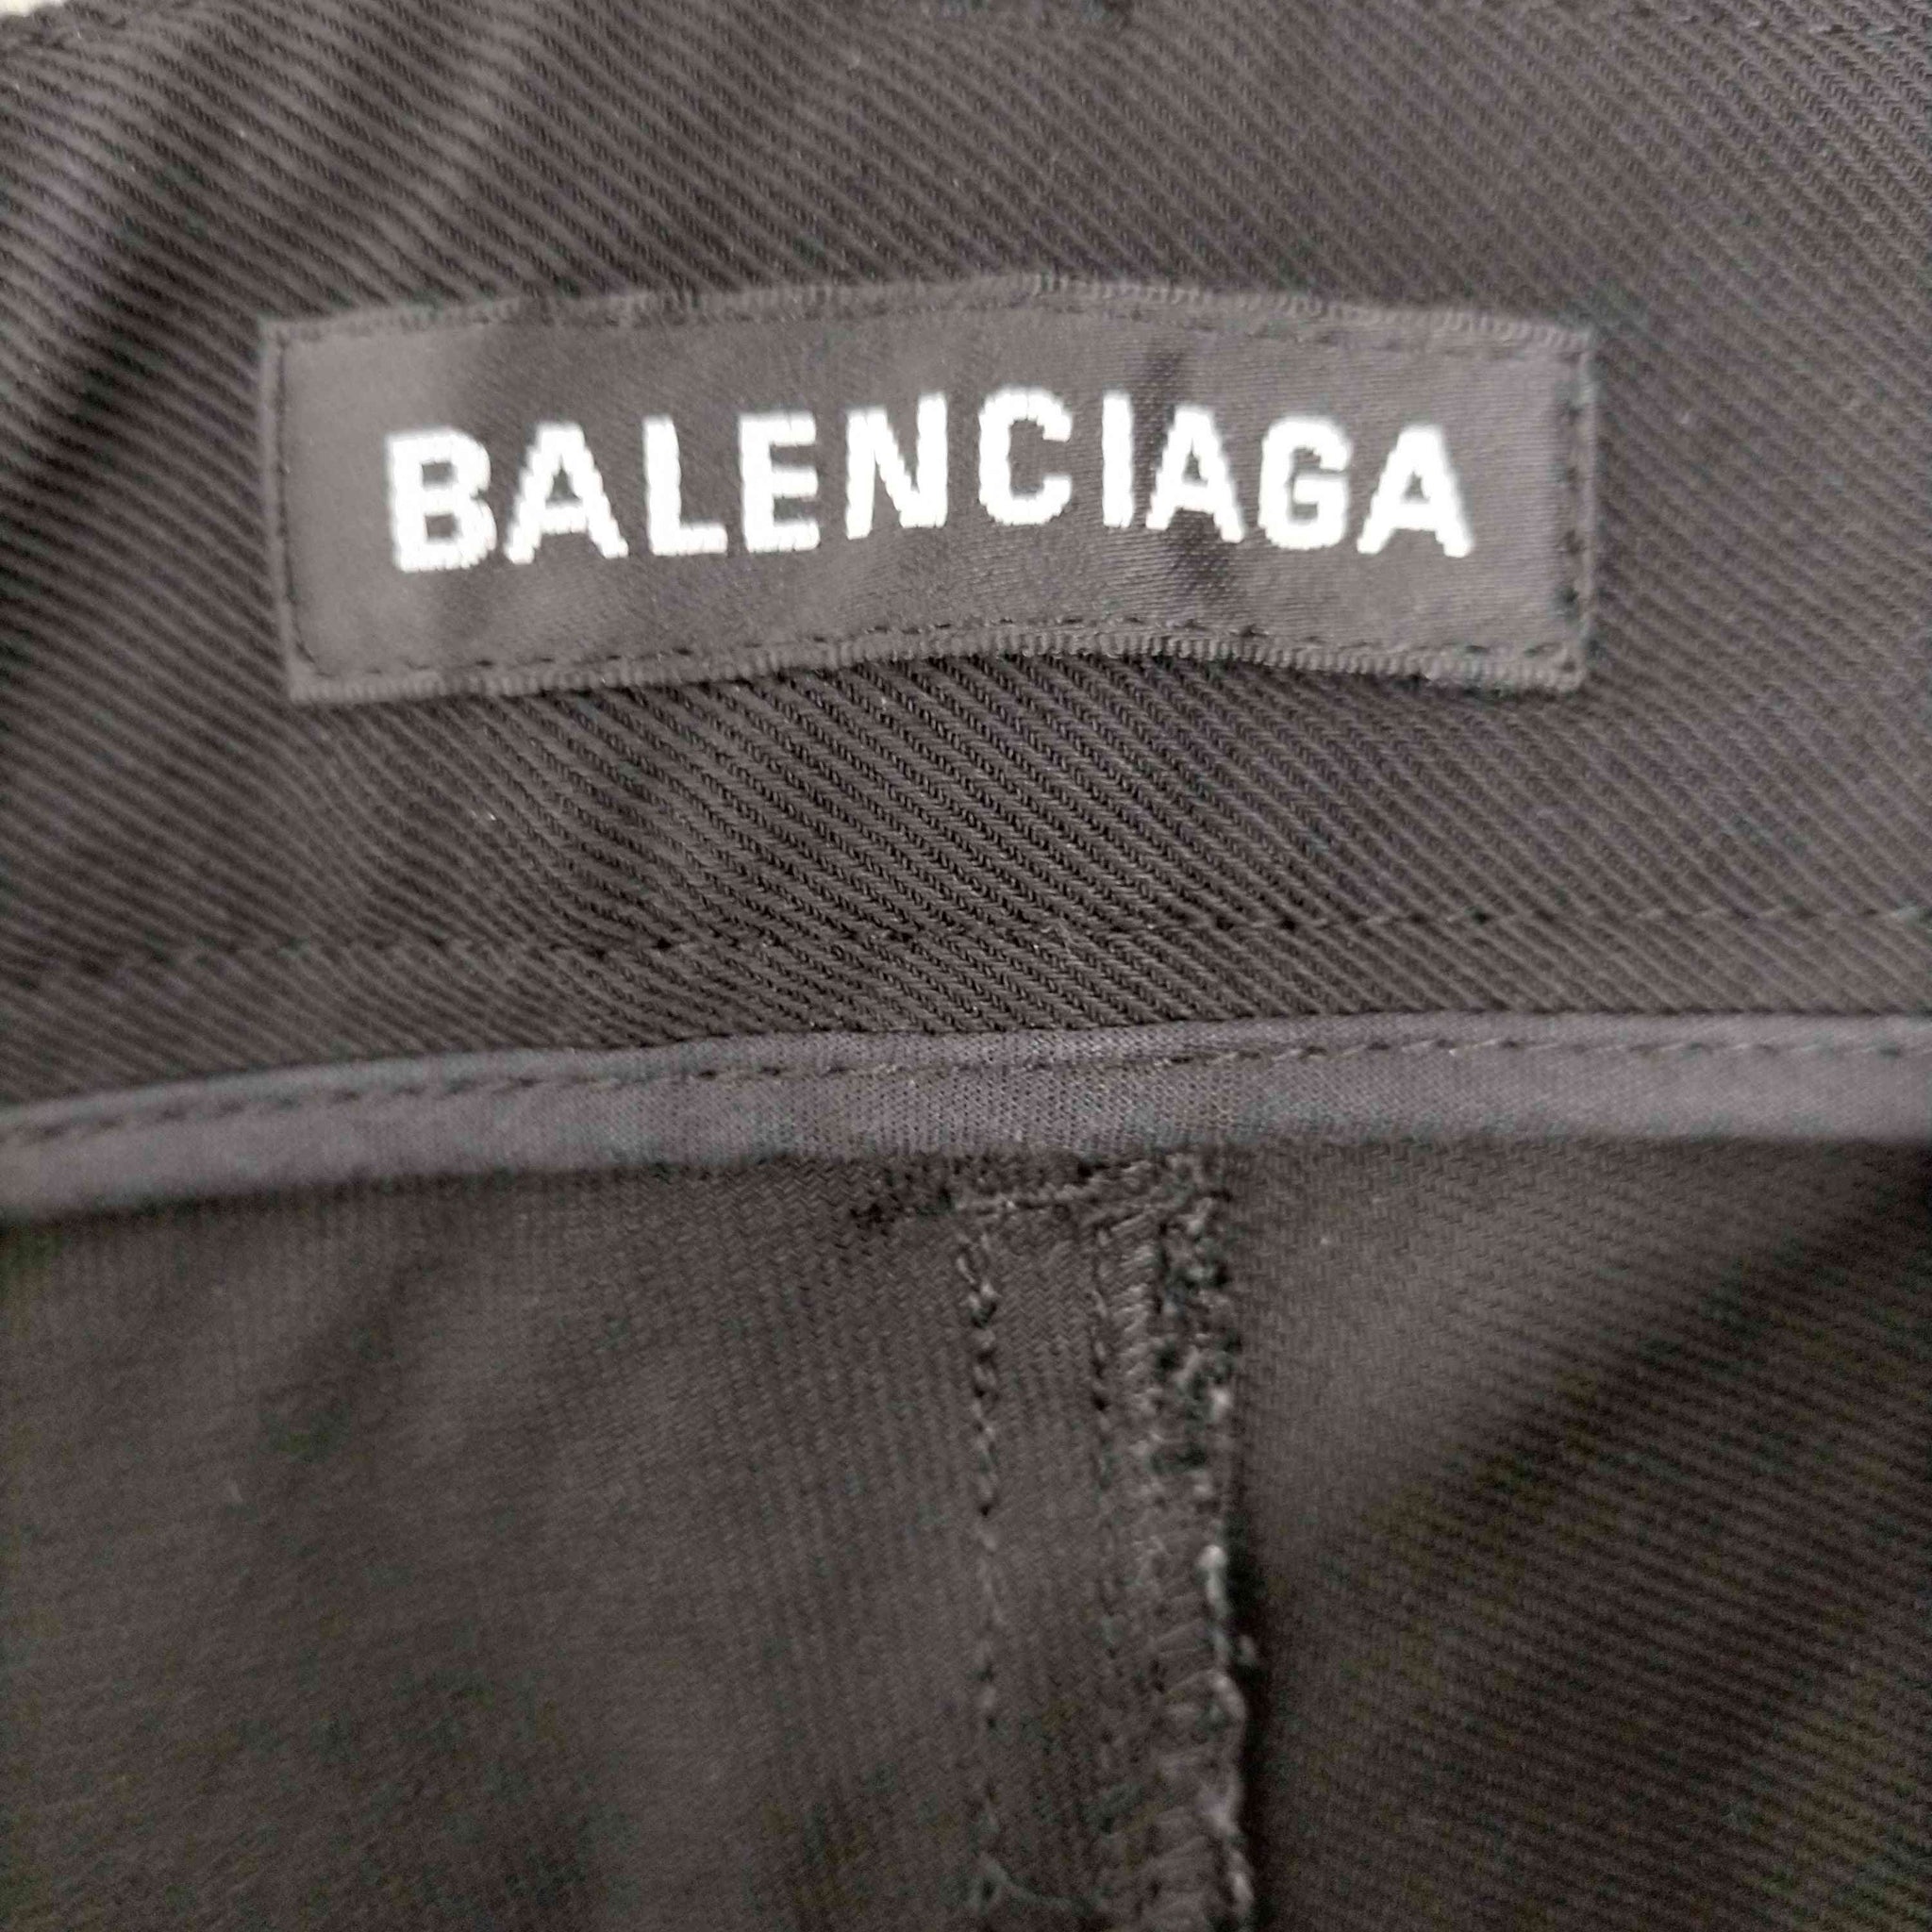 BALENCIAGA(バレンシアガ)スタッフパンツ レーヨン混 パンツ